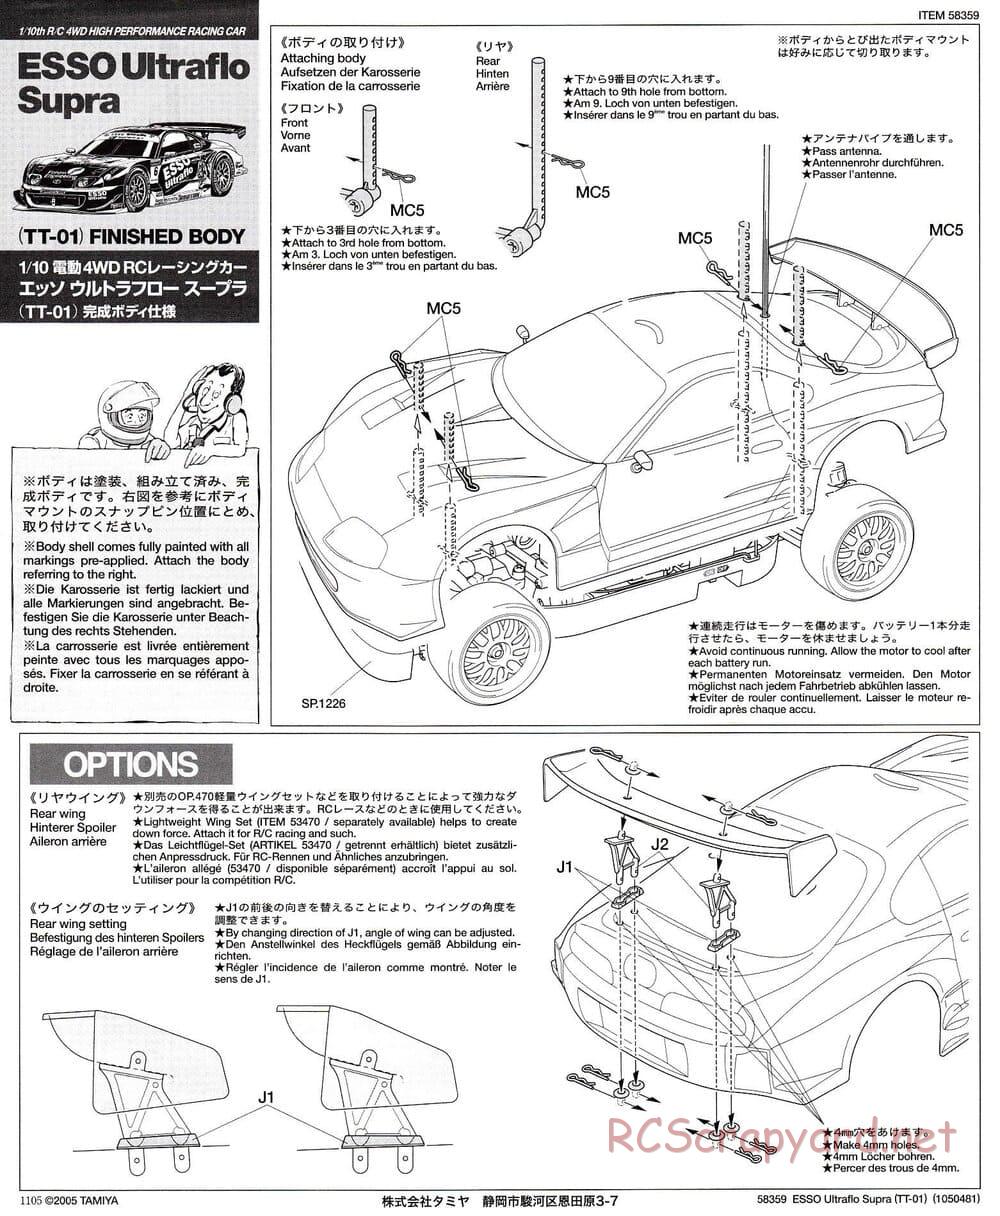 Tamiya - Esso Ultraflo Supra - TT-01 Chassis - Body Manual - Page 1